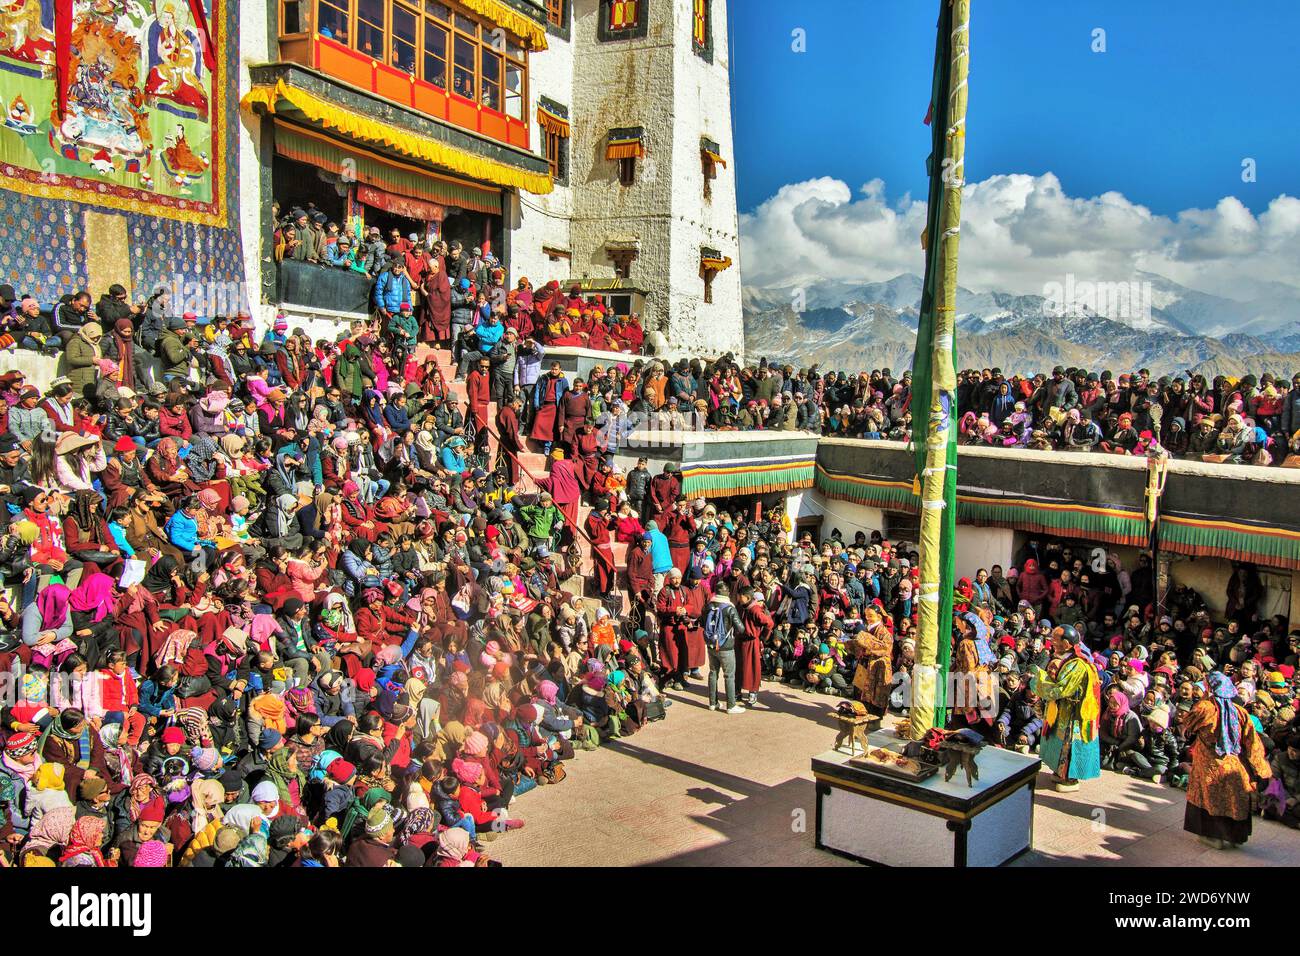 Crowd, Gustor Festival, Pethup Gompa, Spituk Buddhist Monastery, Leh, Ladakh, Kashmir, India, Asia Stock Photo